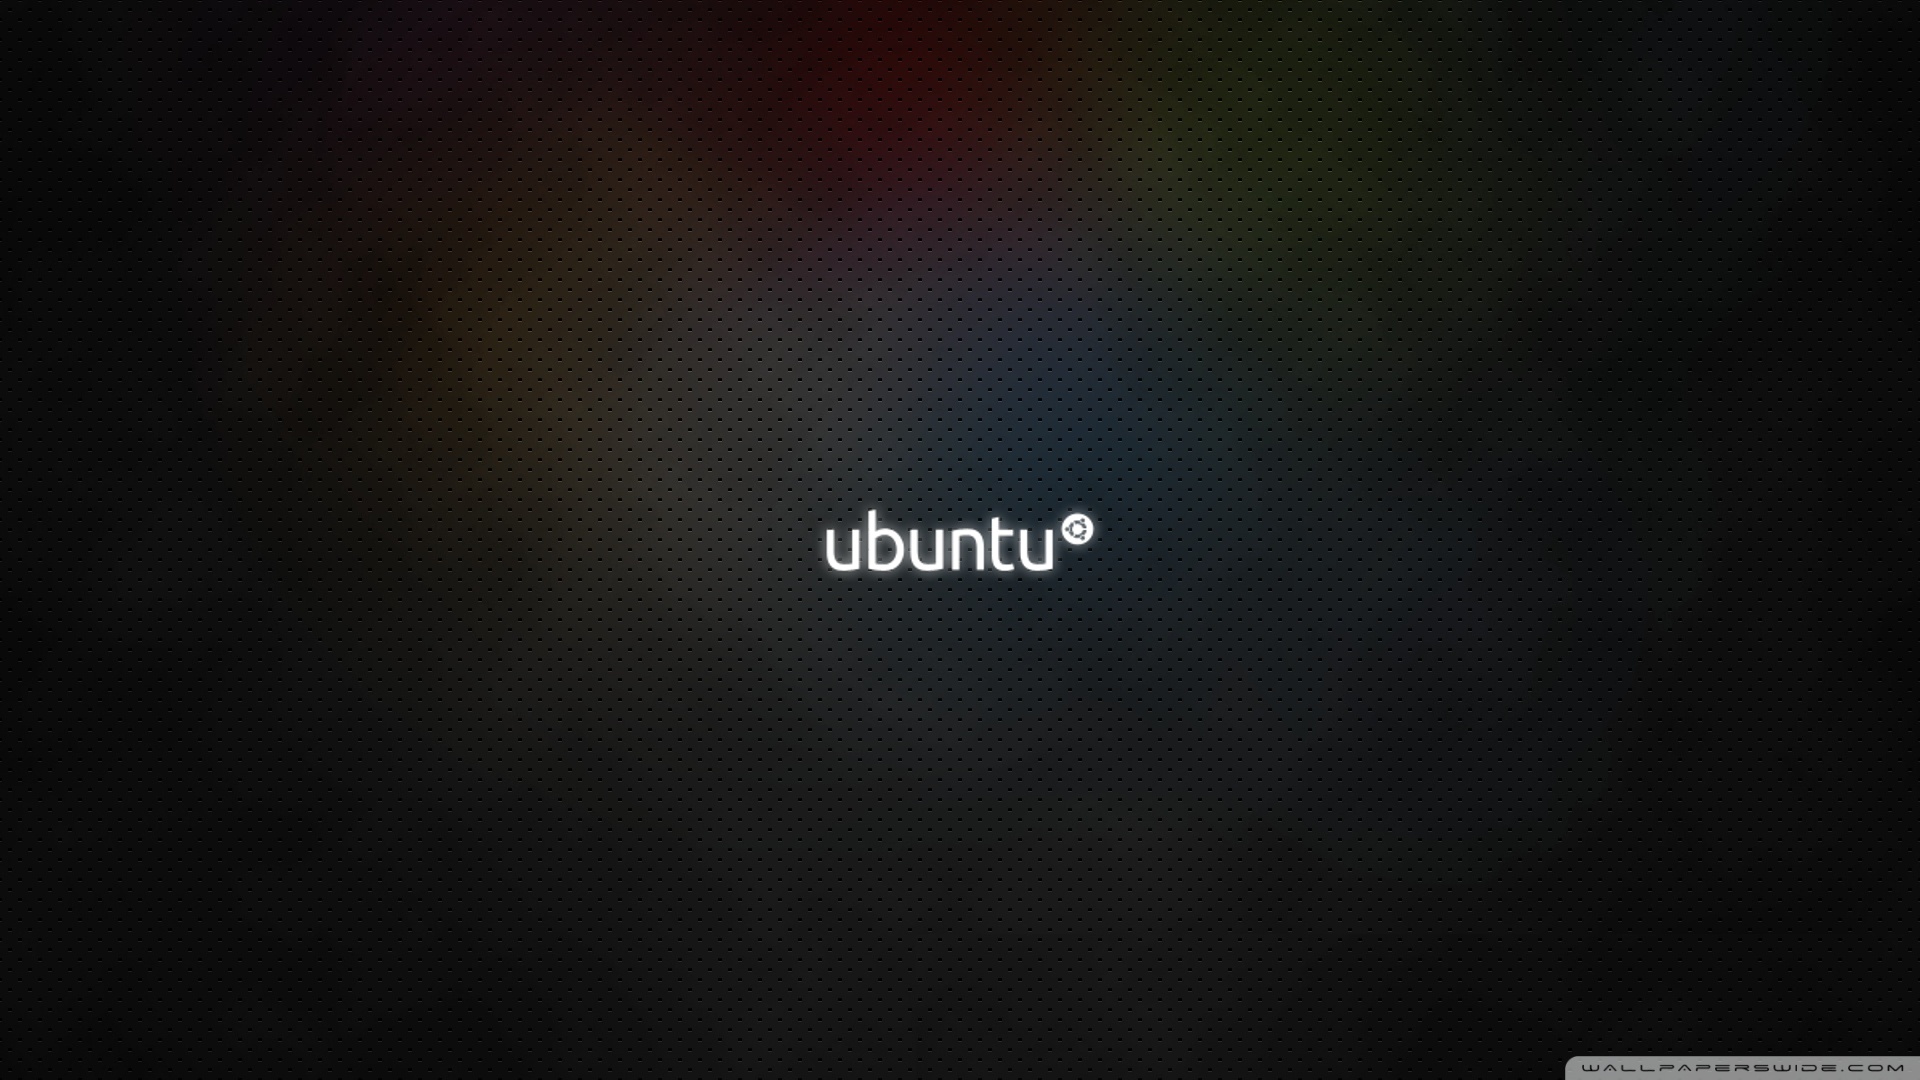 Ubuntu Wallpaper Image